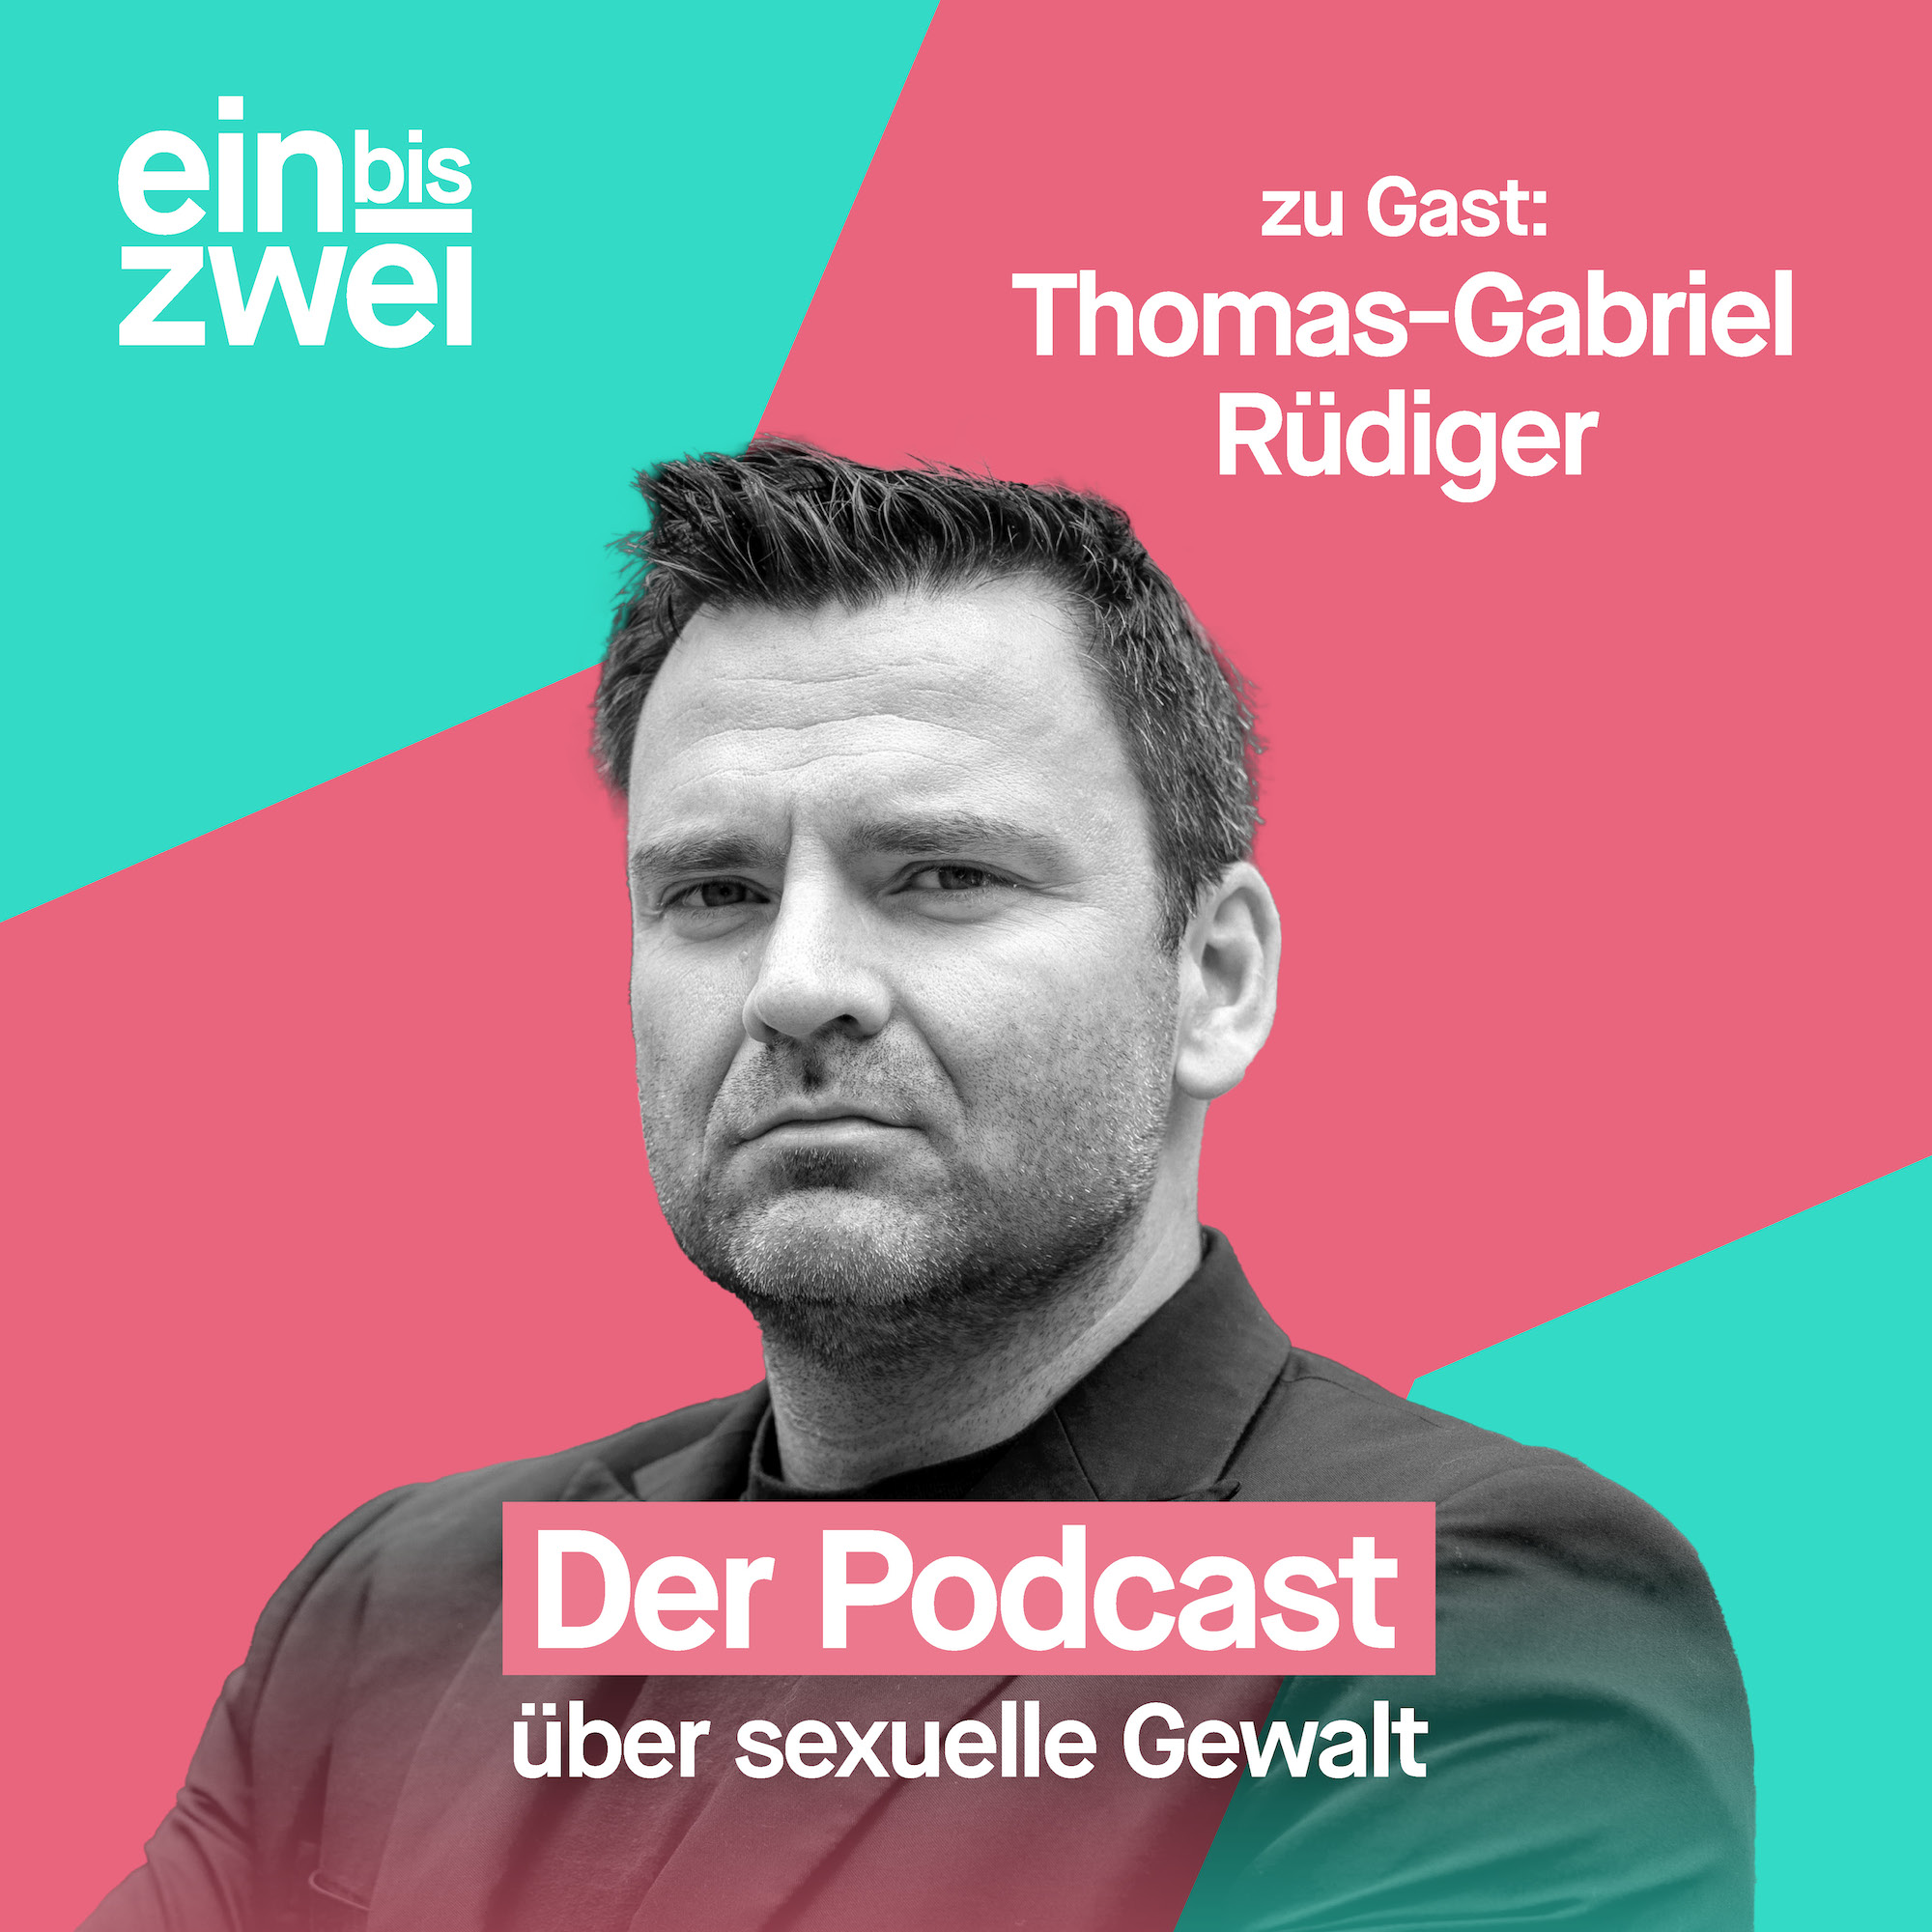 Thomas-Gabriel Rüdiger